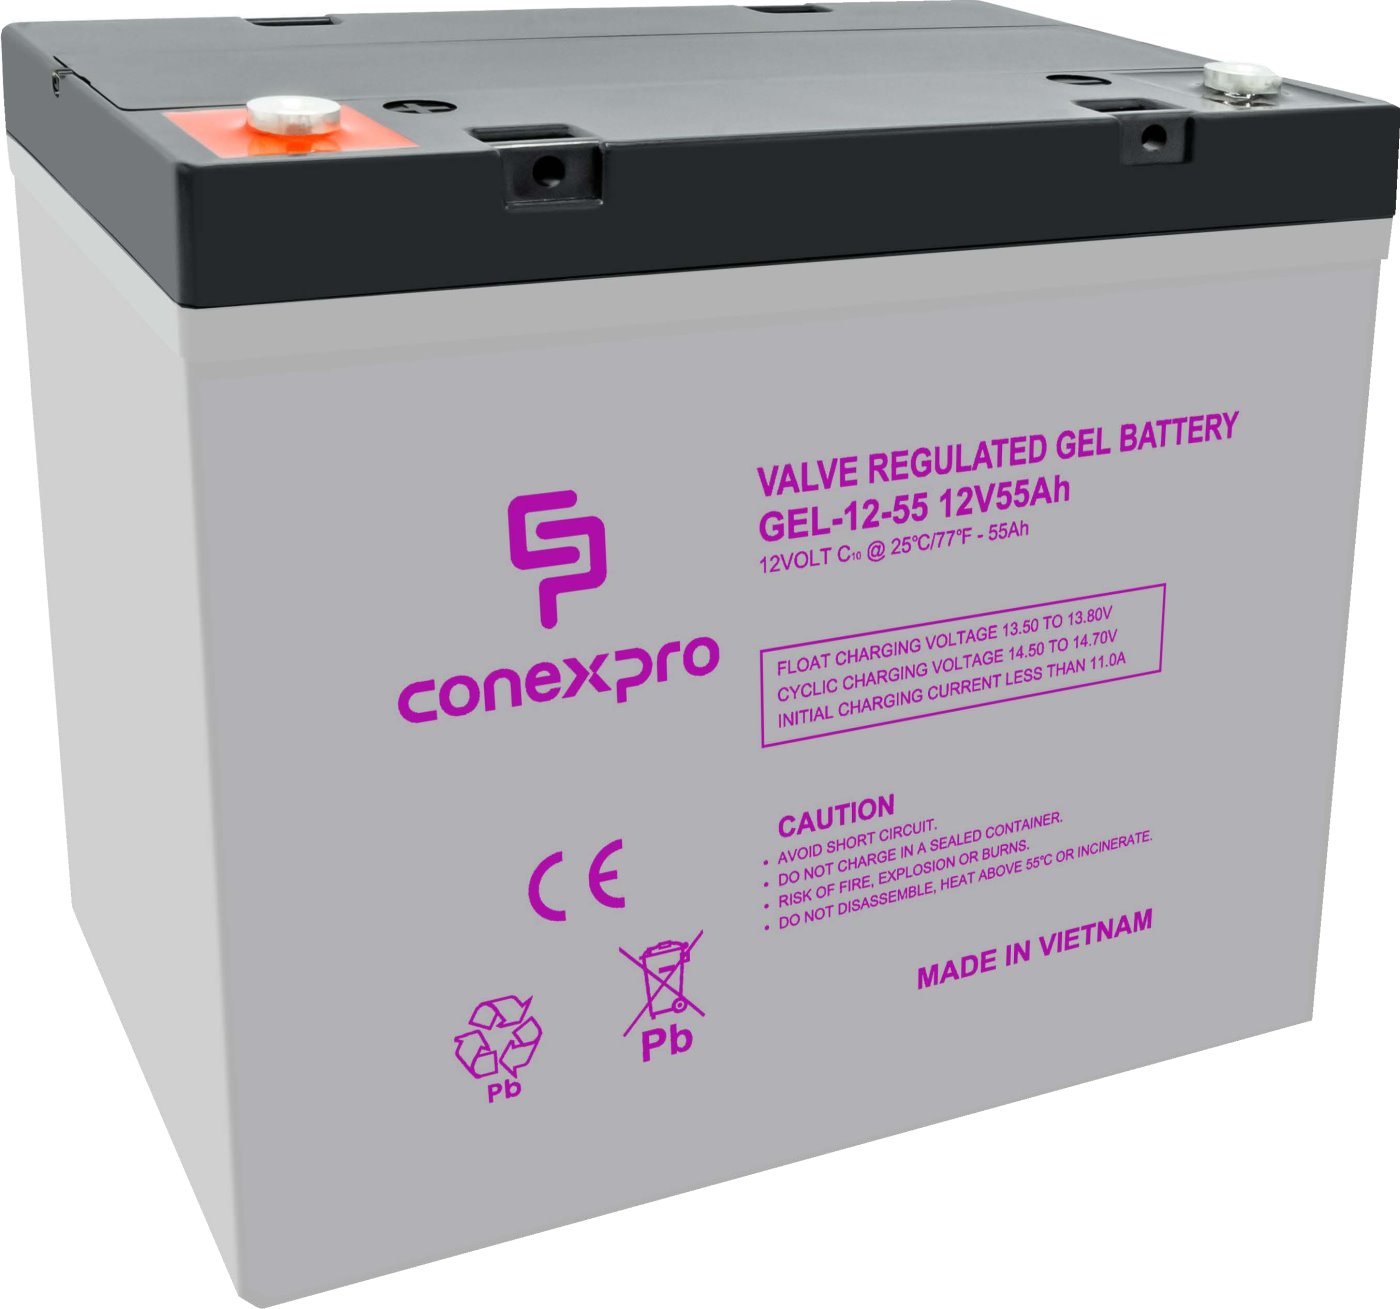 Conexpro baterie gelová, 12V, 55Ah, životnost 10-12 let, M6, Deep cycle